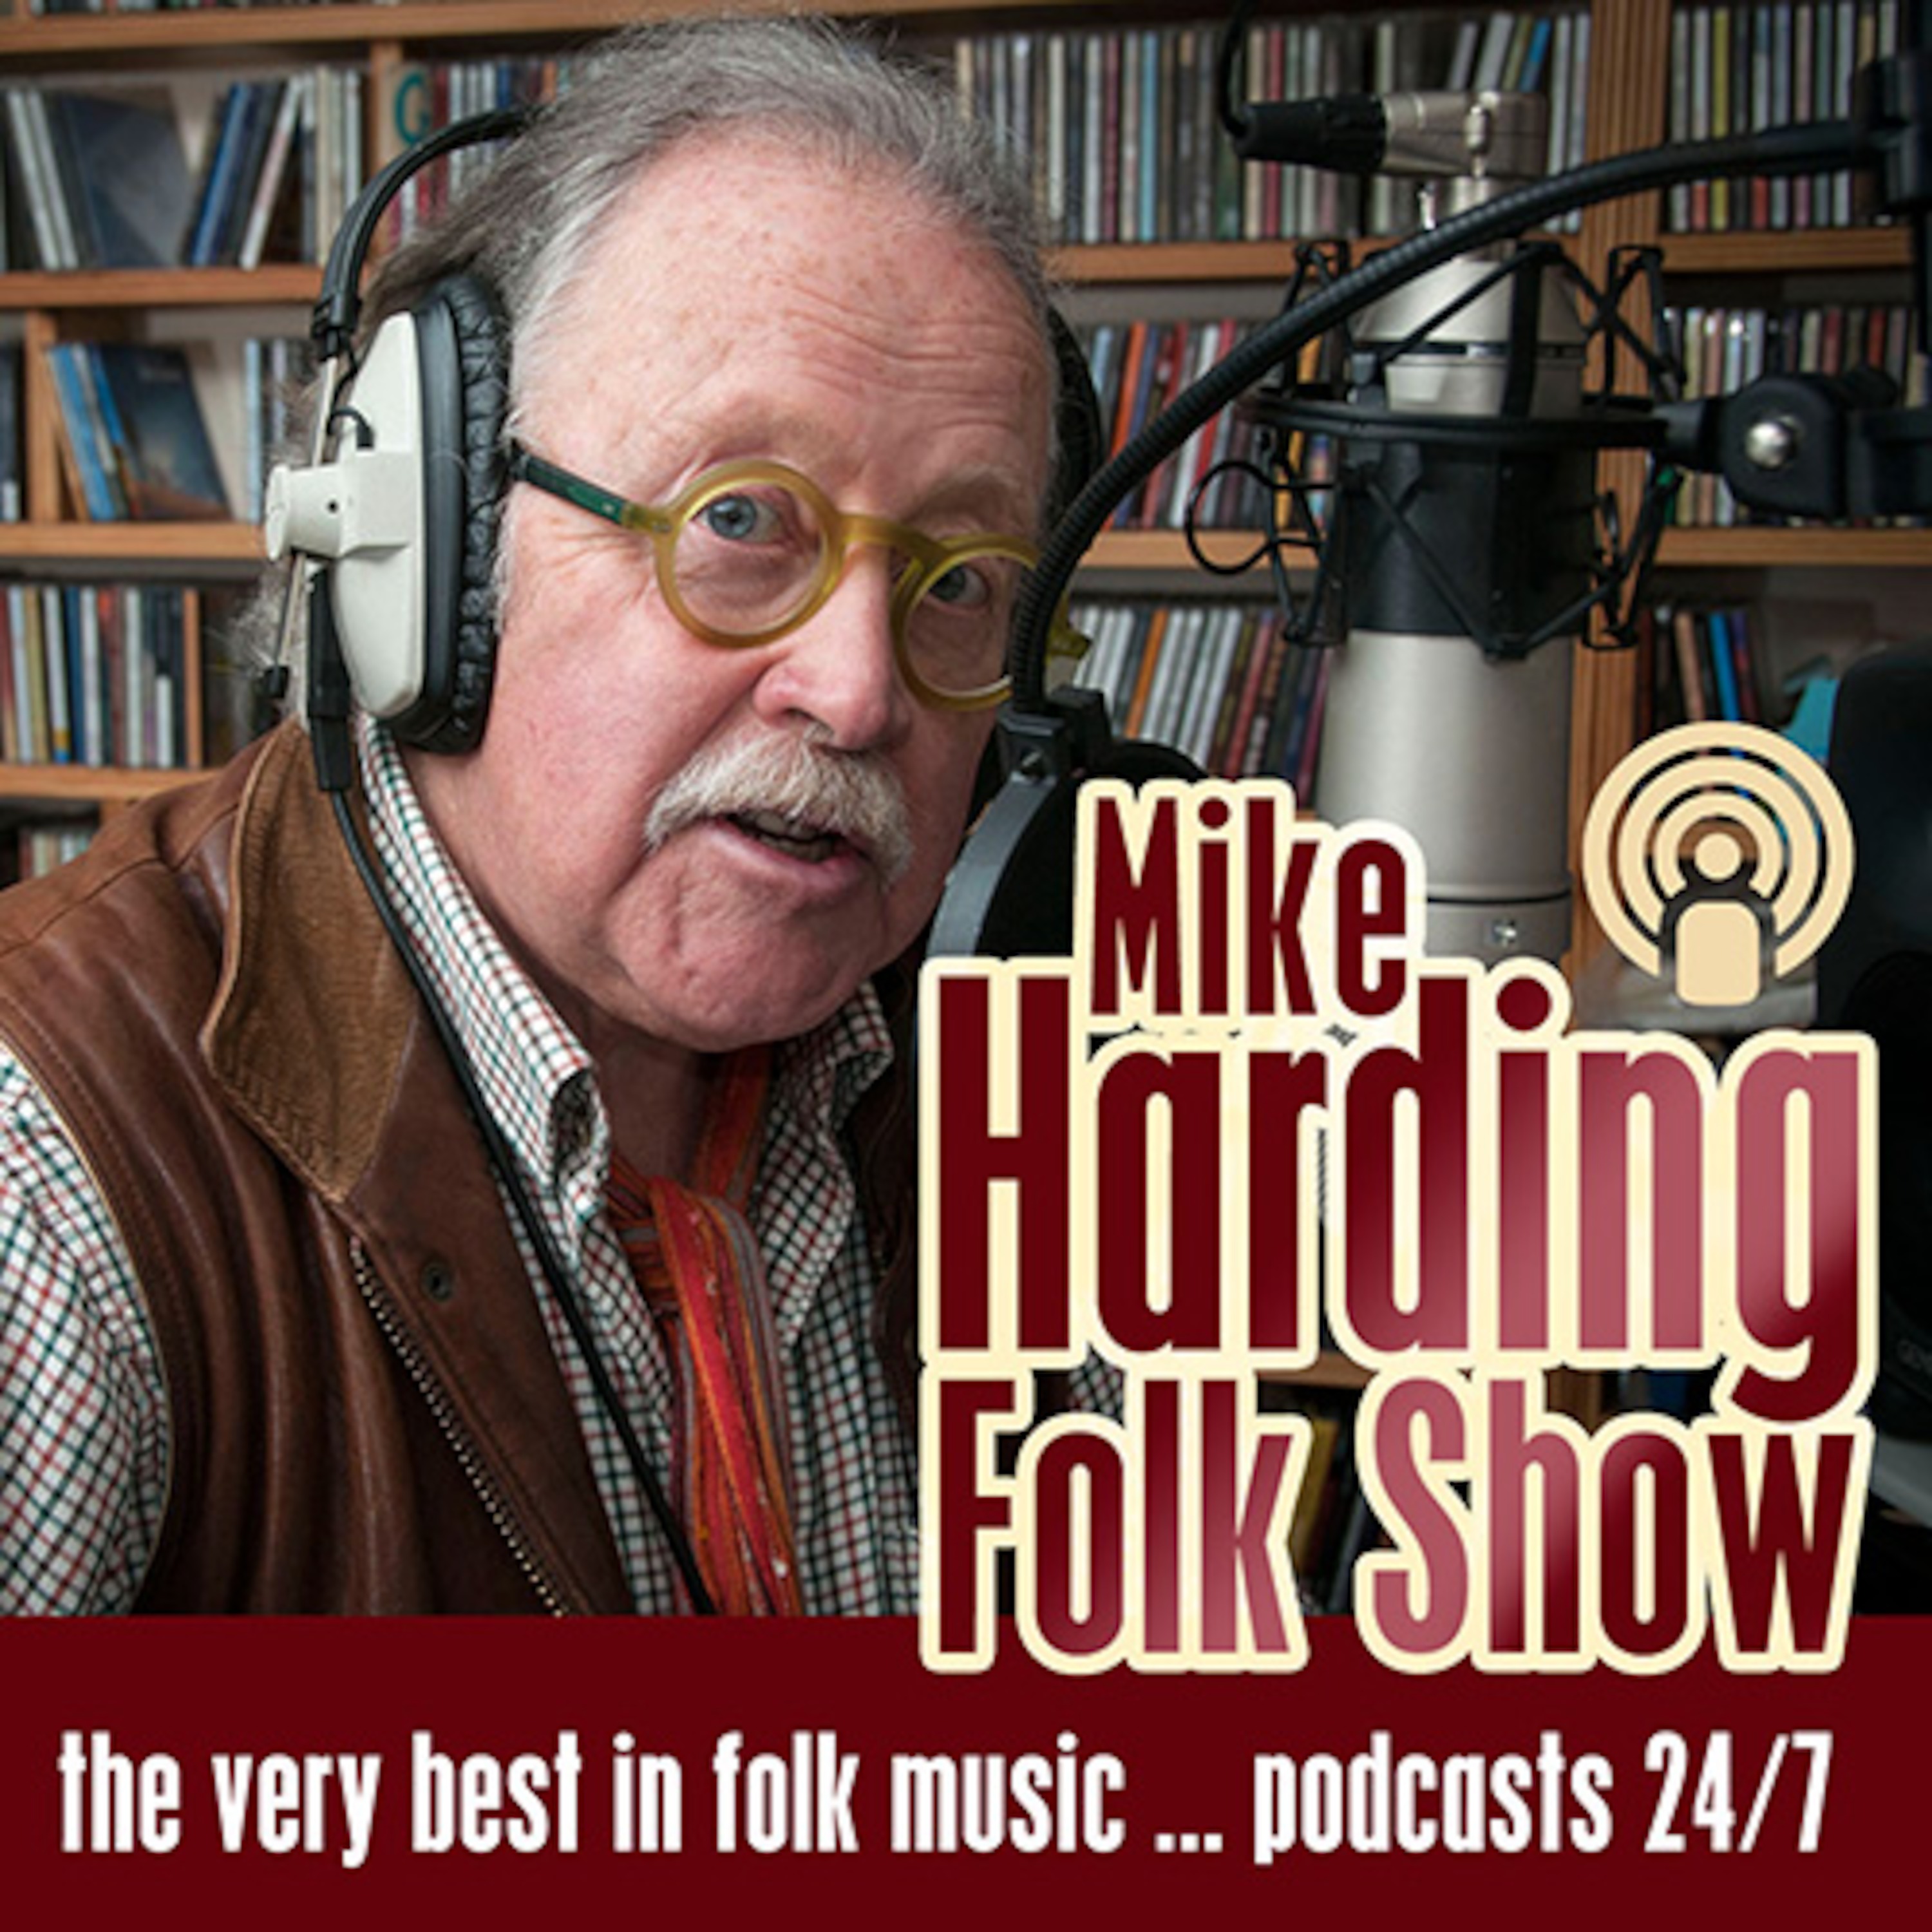 Mike Harding Folk Show 105